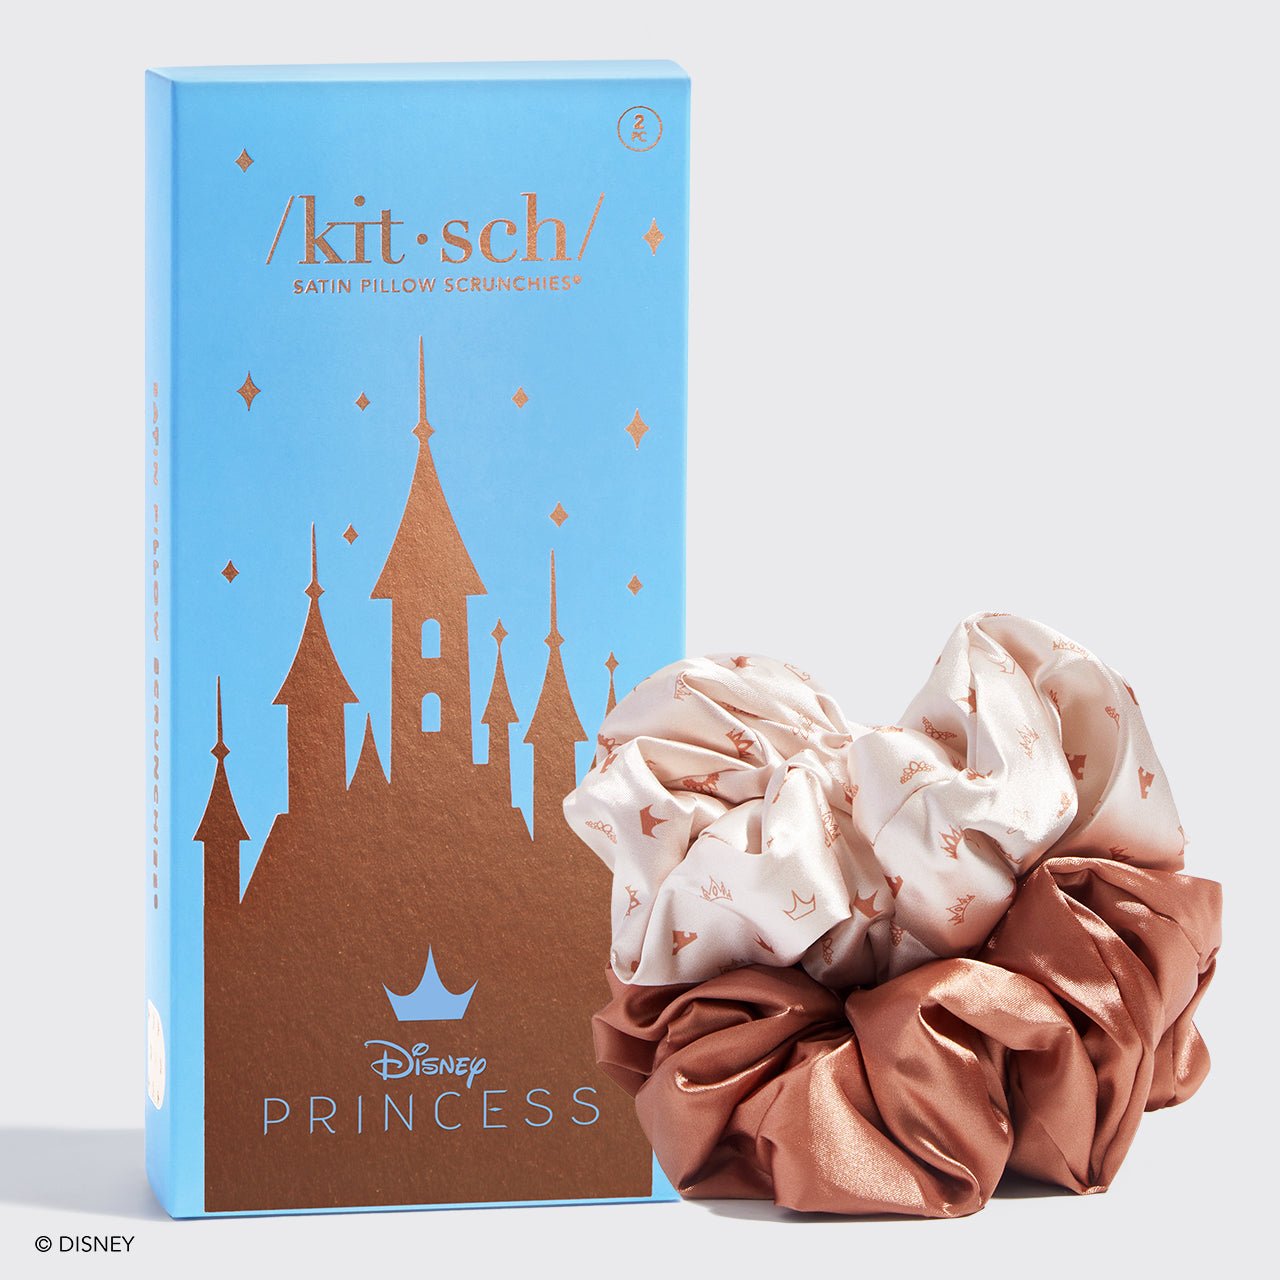 Kitsch & Disney 枕头束带 - 沙漠皇冠